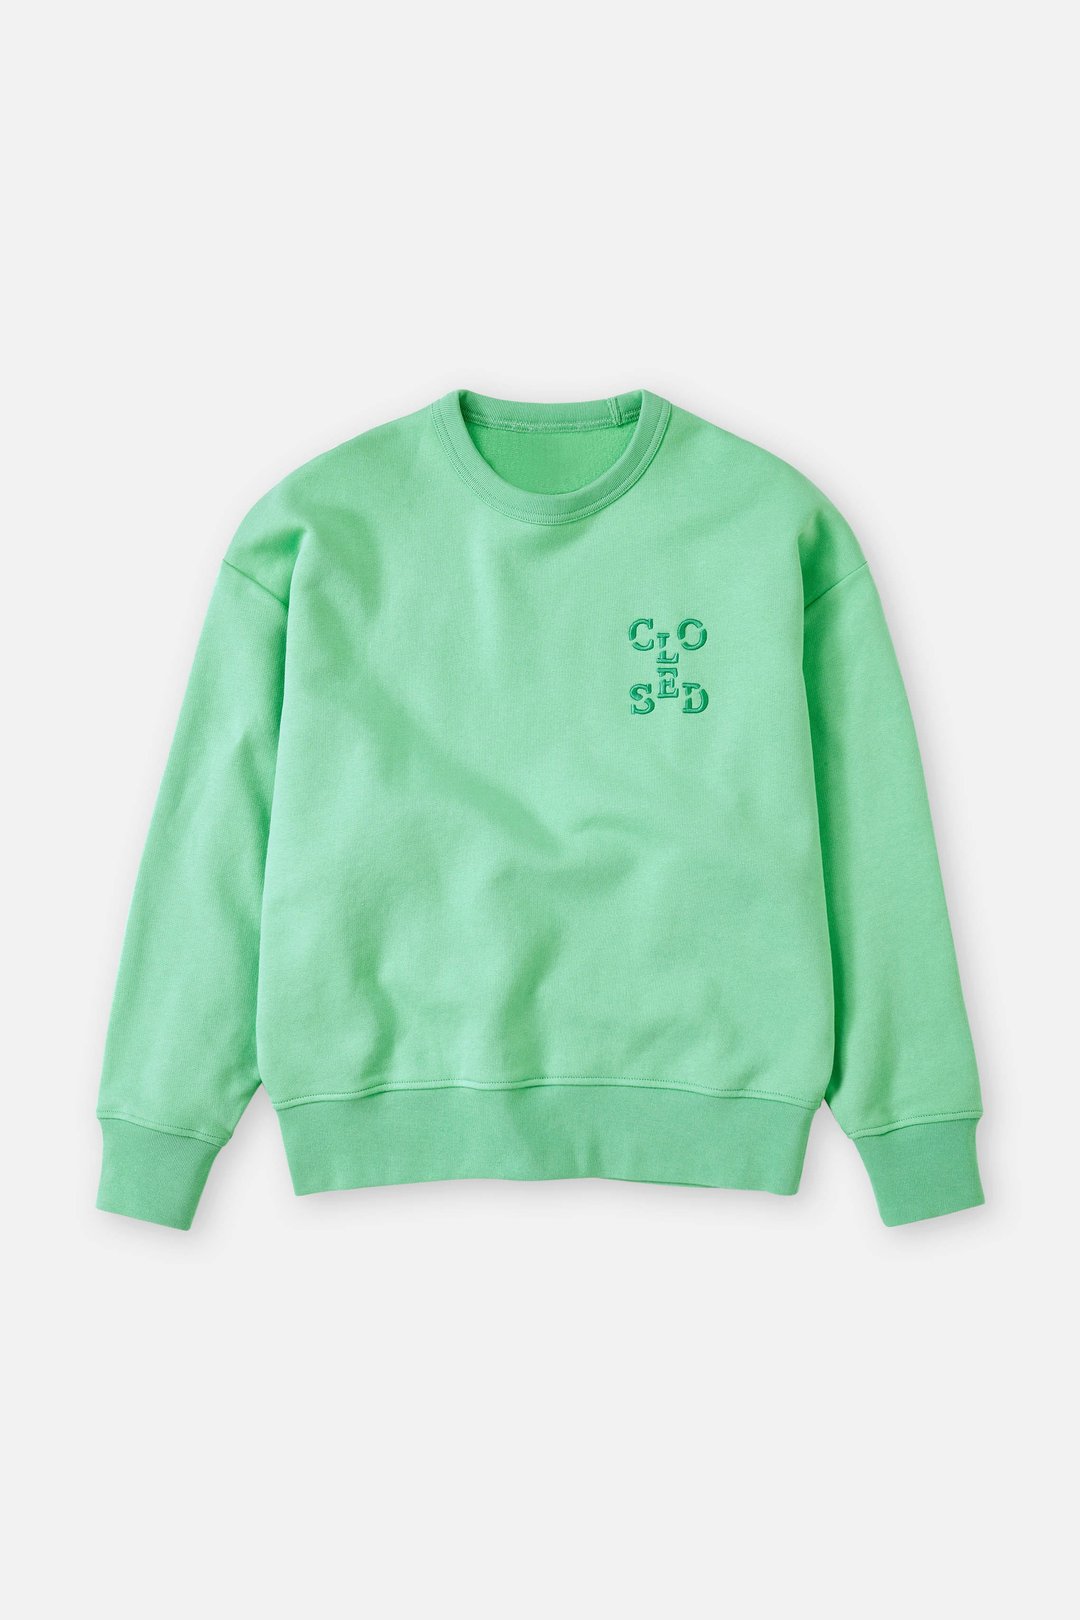 Sweatshirt with logo c95495 472 em